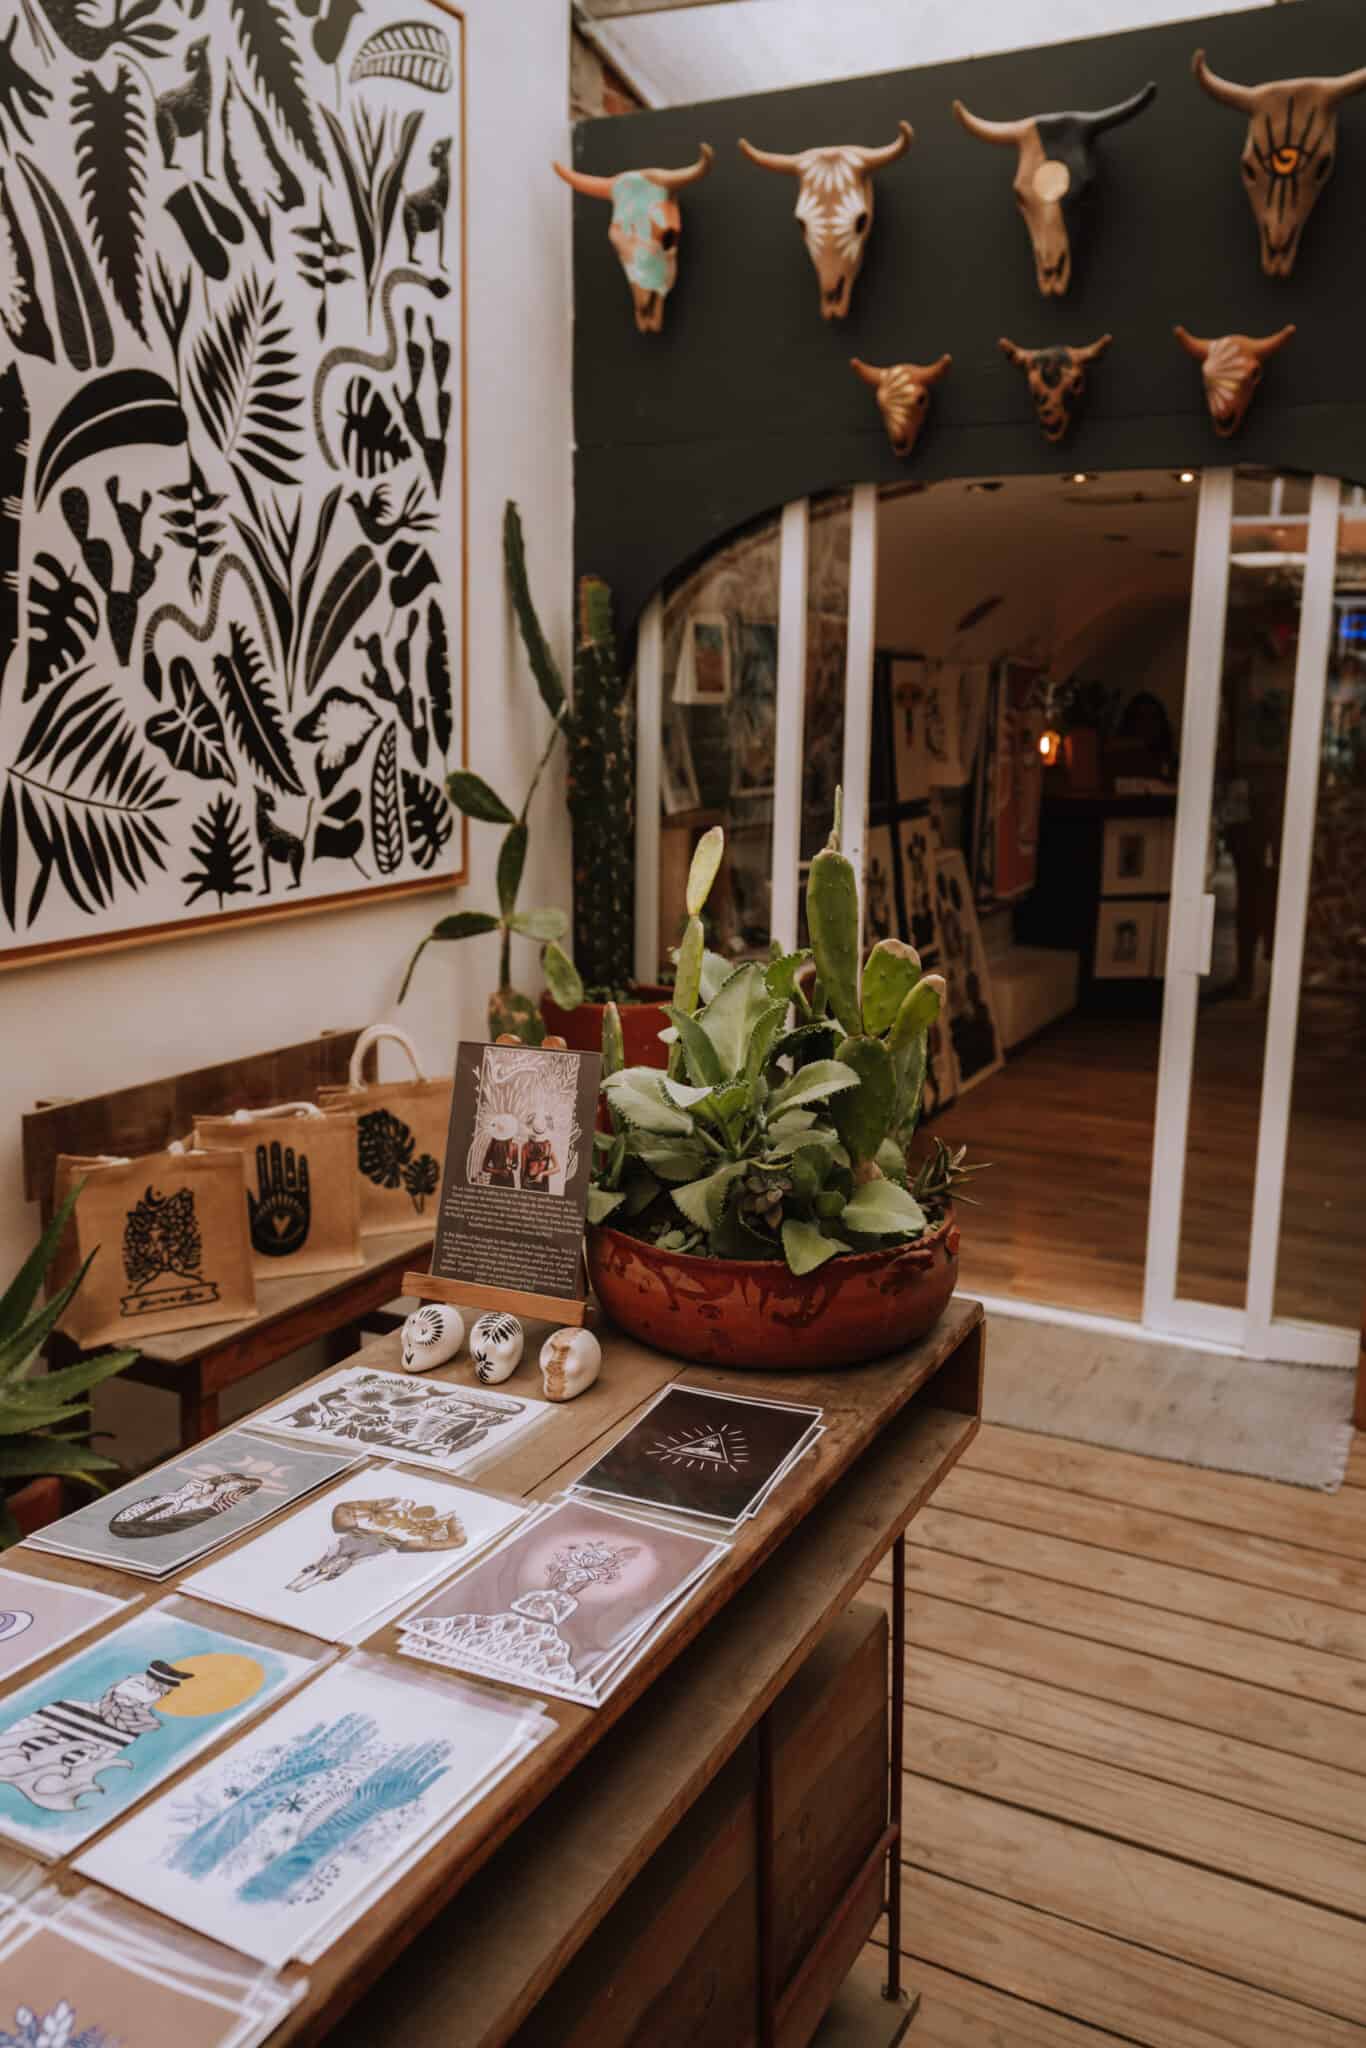 A Sayulita shop with plants and art on the wall.